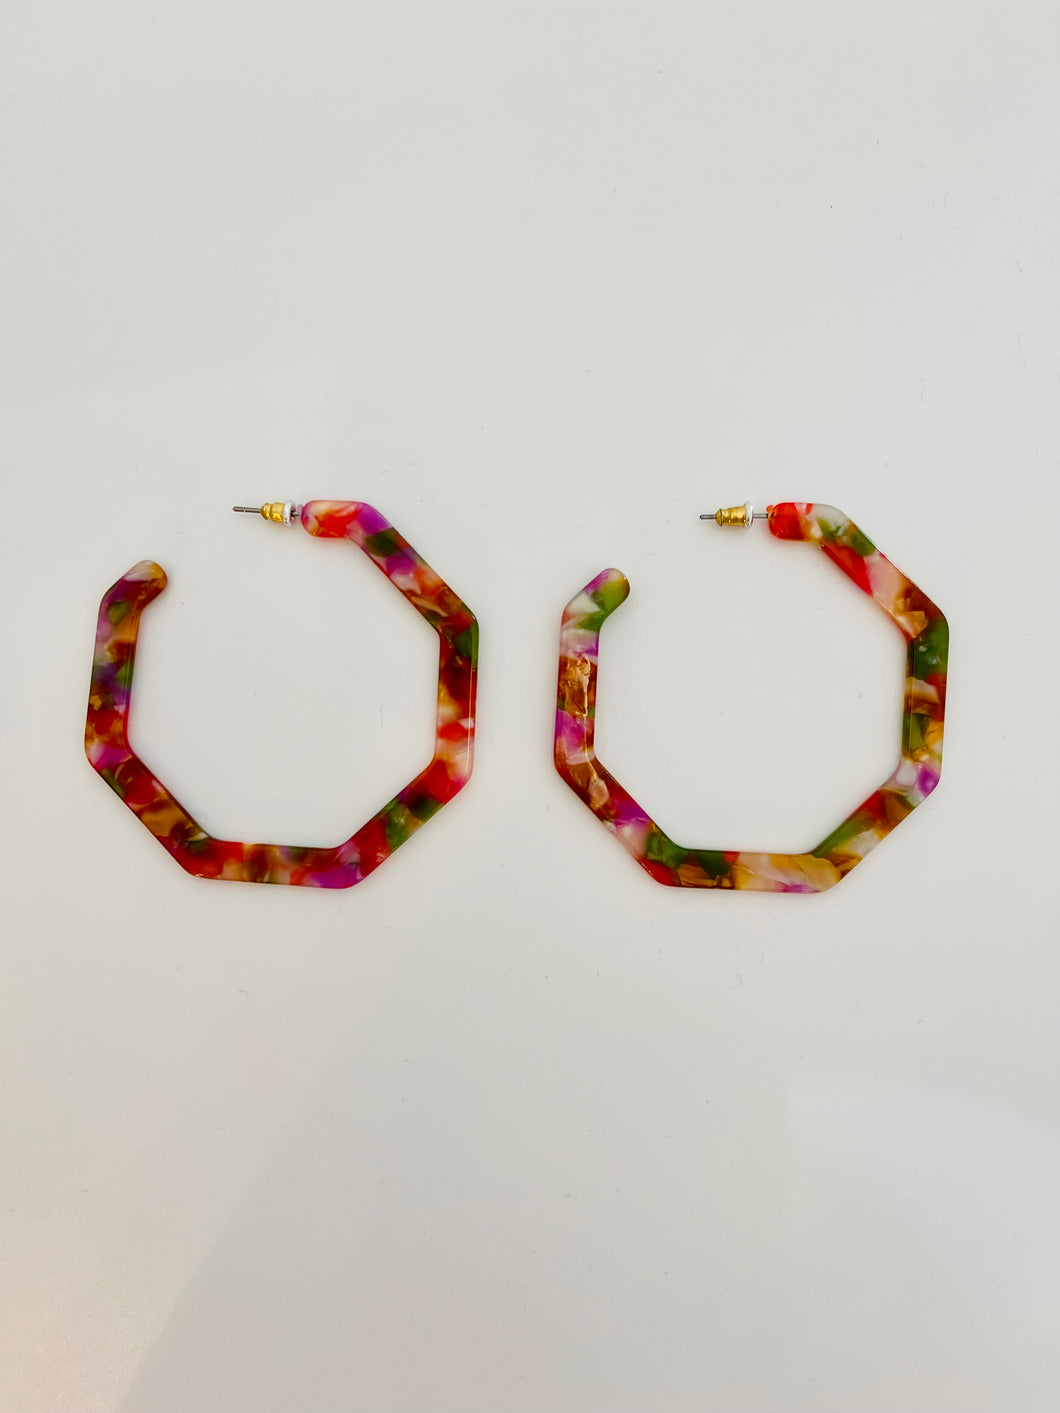 The Autumn Multi Colored Acrylic Octagonal Hoop Earring